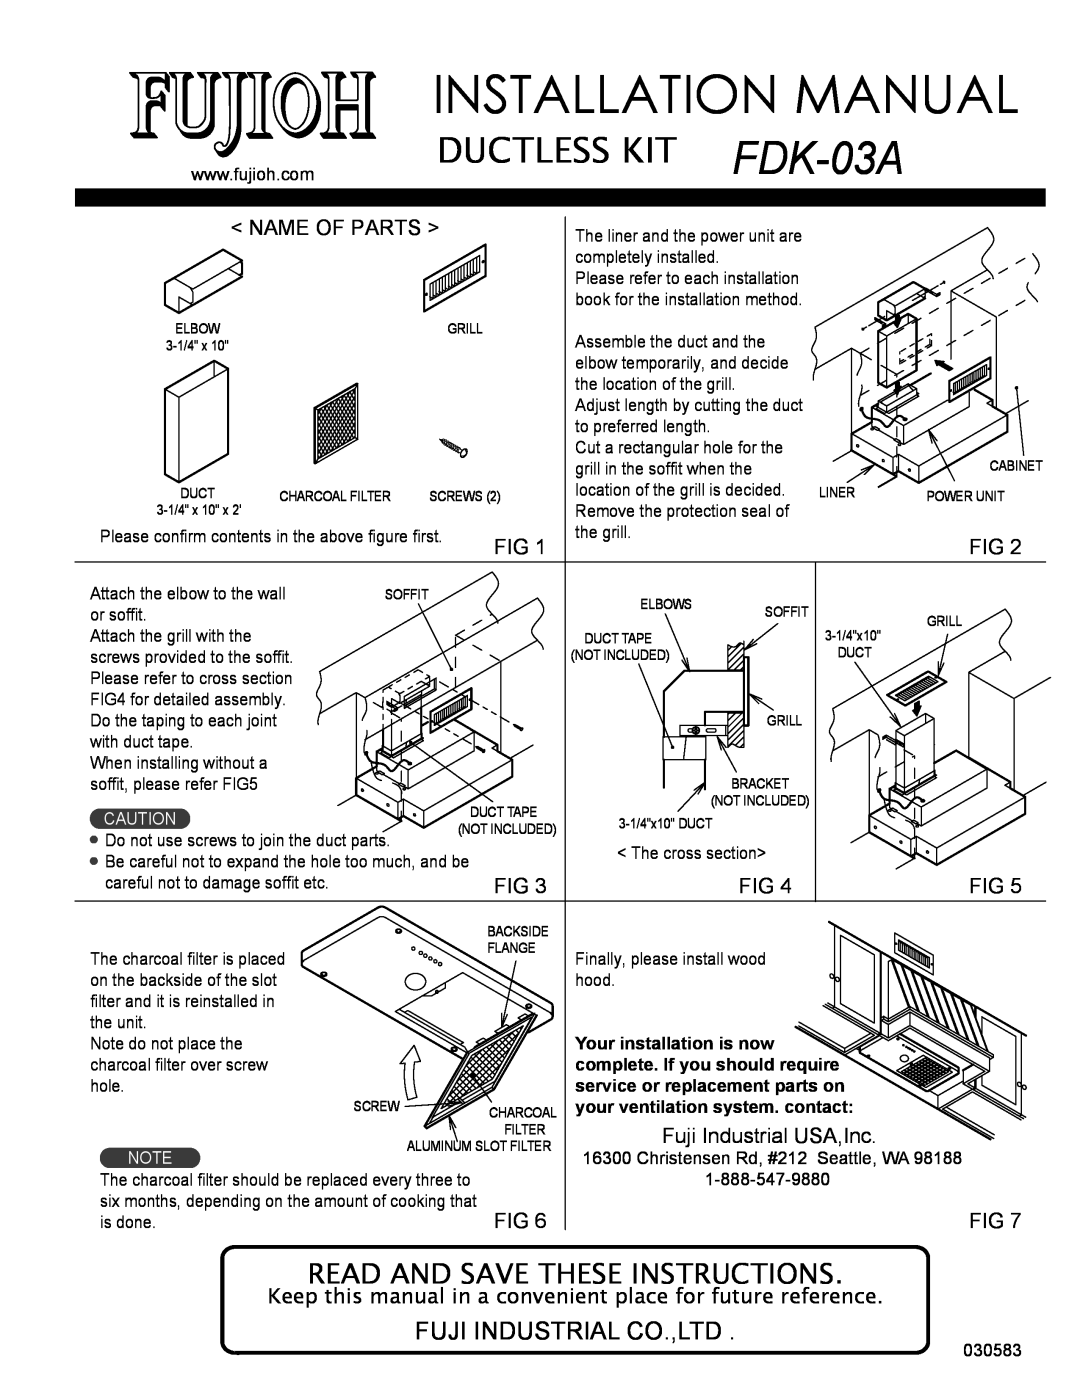 Fujioh FDK-03A installation manual Installation Manual, Ductless Kit, Name Of Parts, Fuji Industrial USA,Inc 